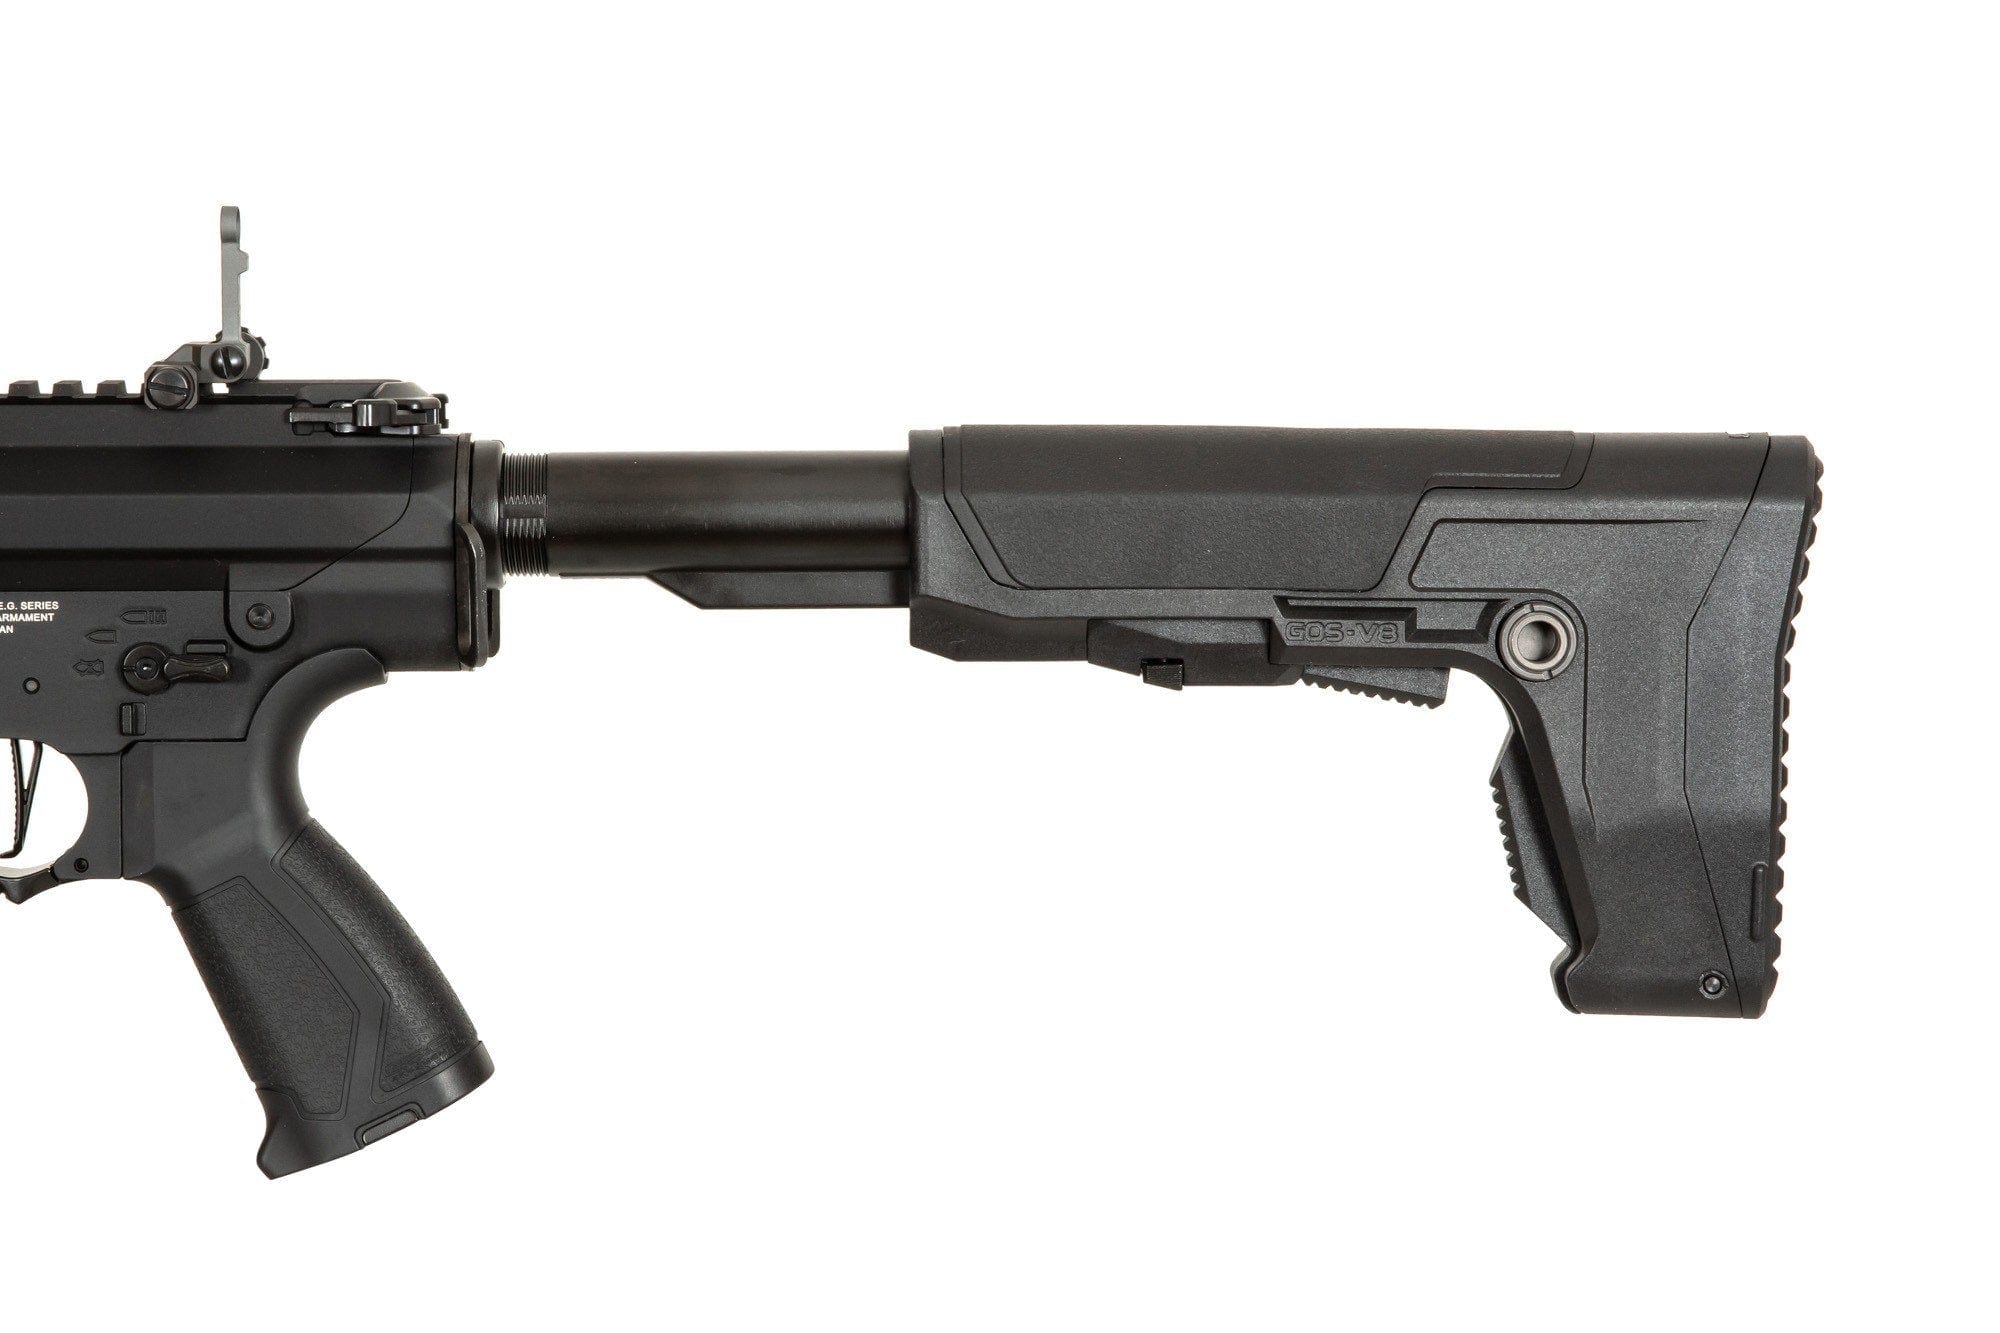 TR16 SBR 308 Mk2 carbine replica by G&G on Airsoft Mania Europe